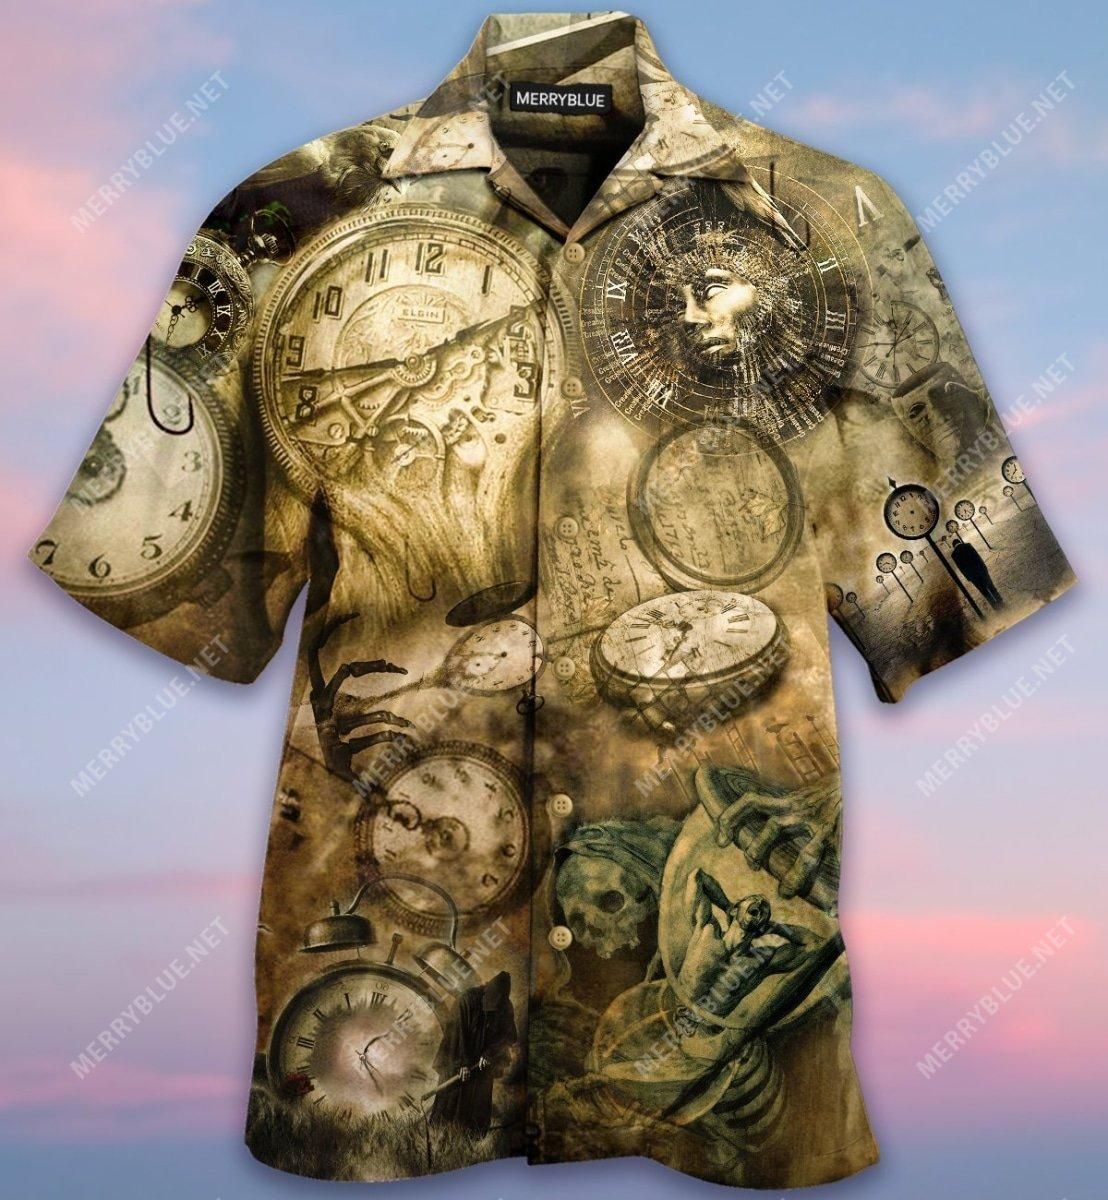 Poker Player I’M All In Aloha Hawaiian Shirt Colorful Short Sleeve Summer Beach Casual Shirt For Men And Women